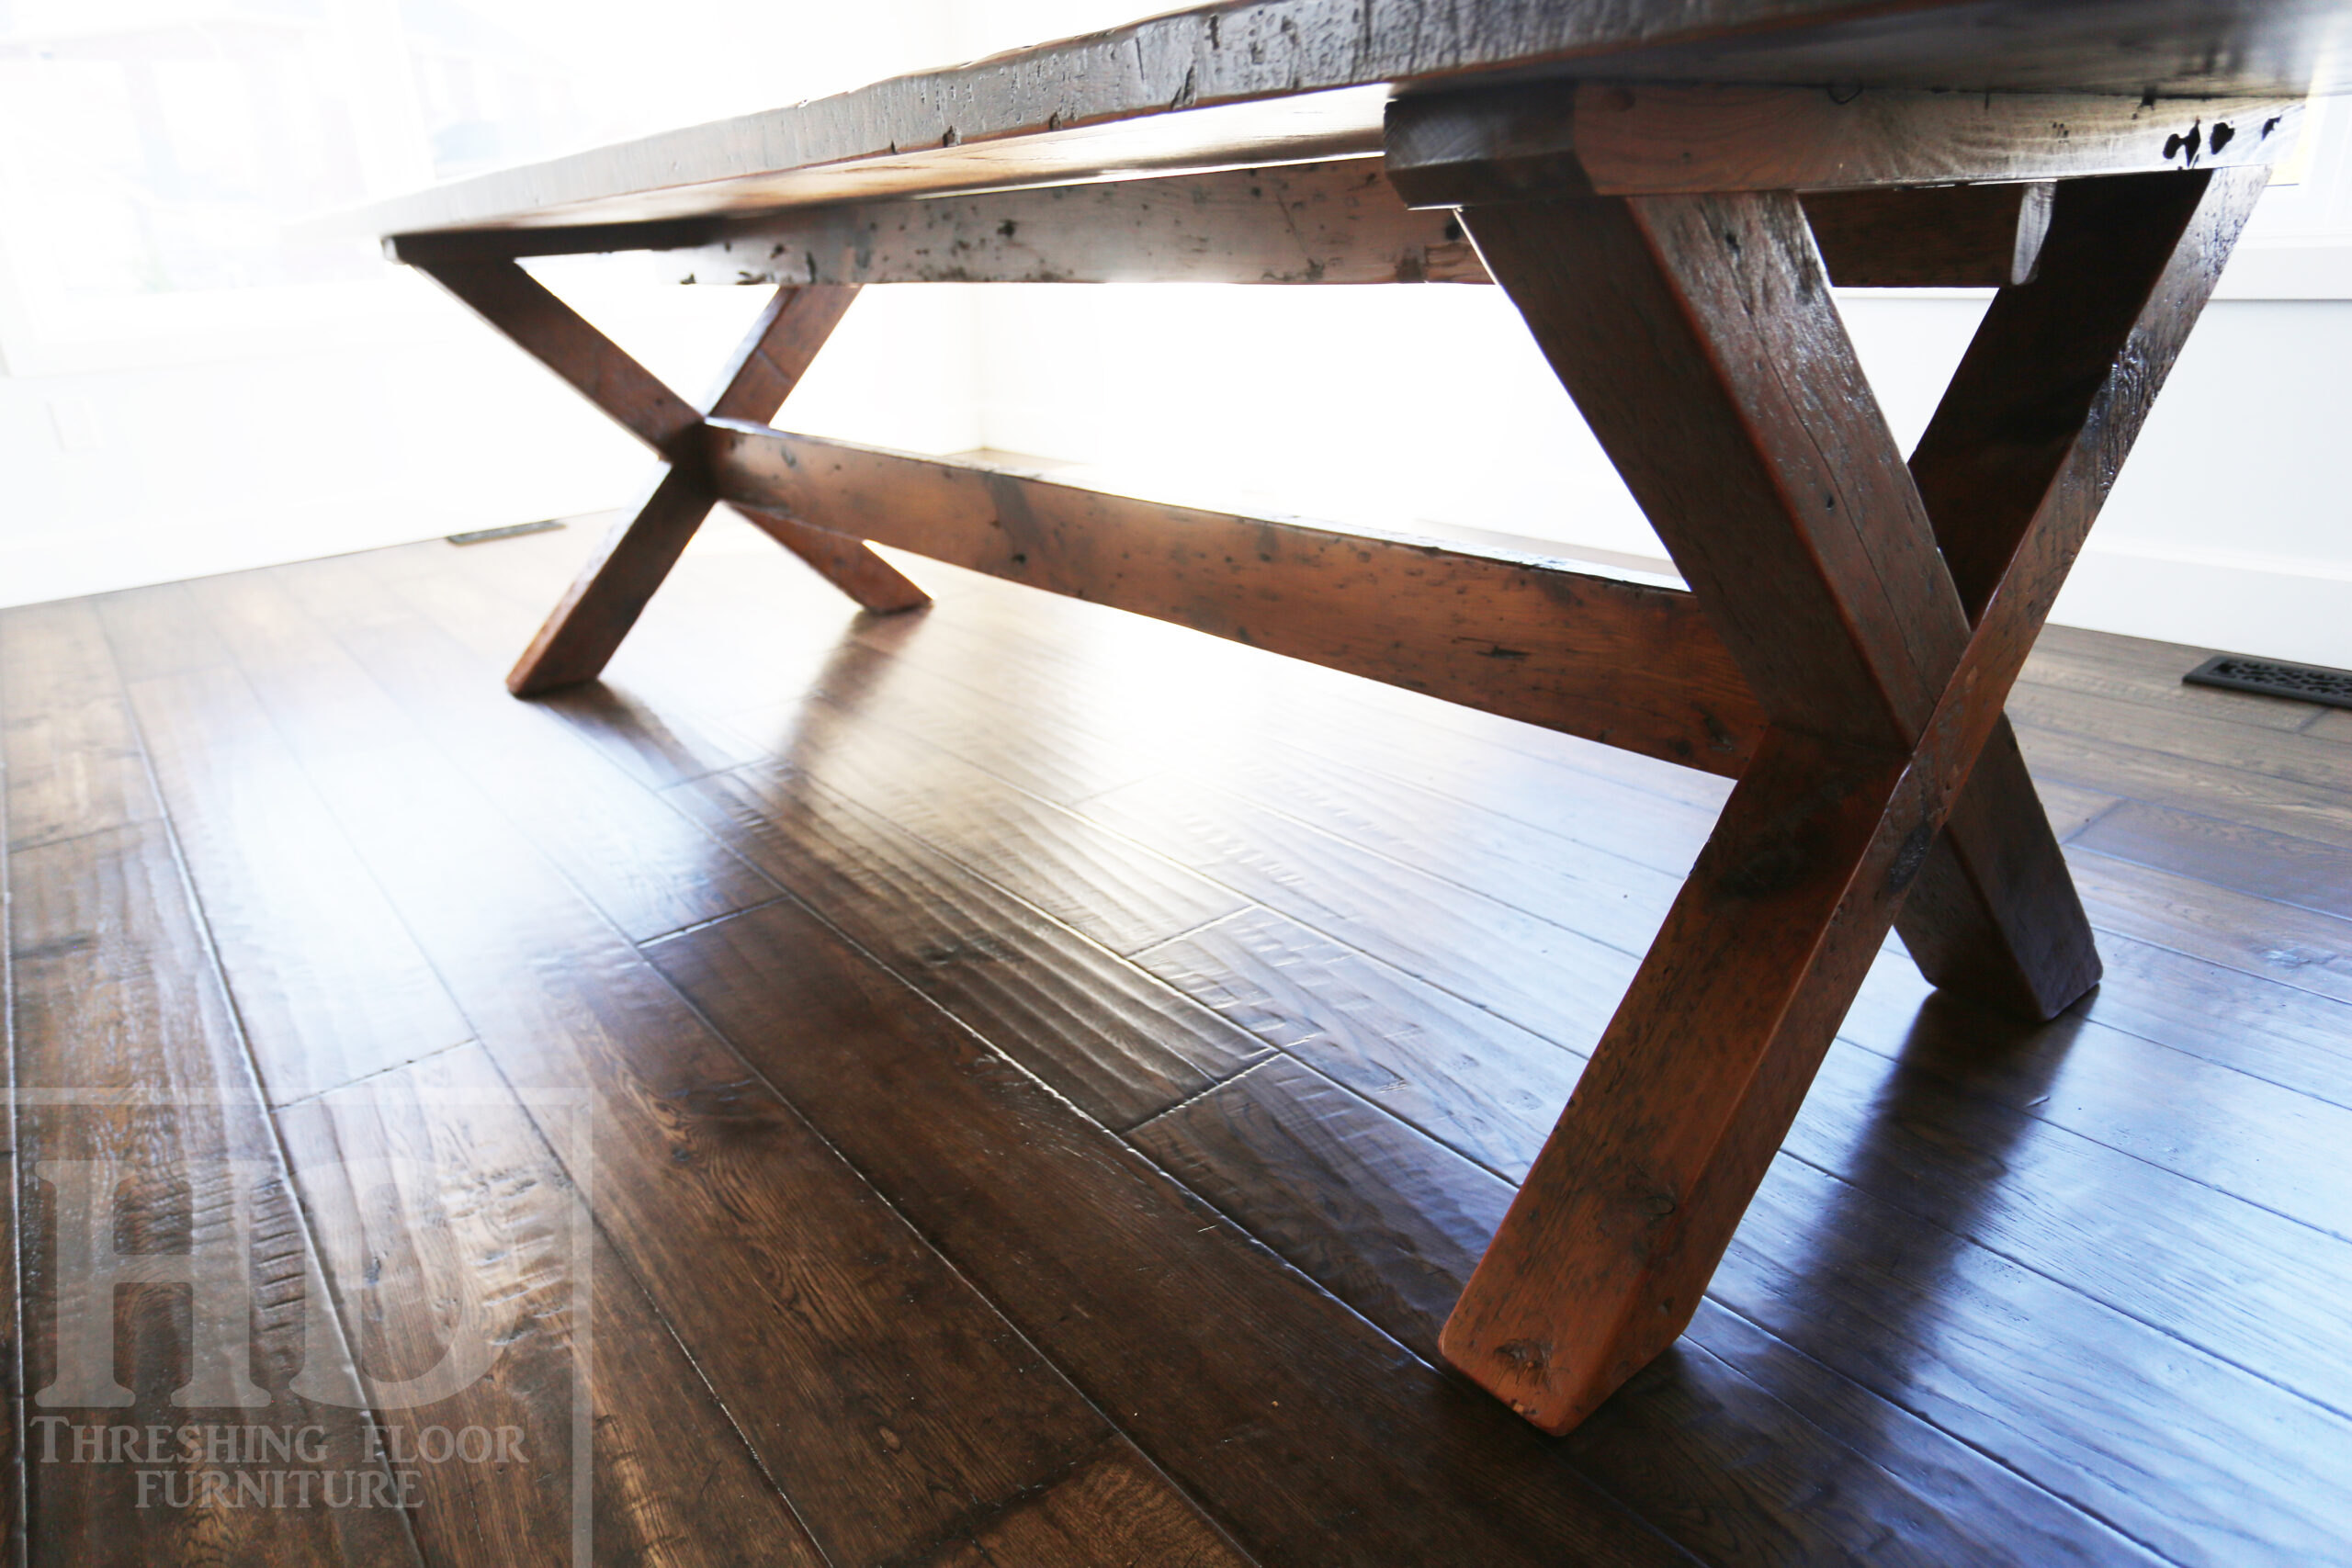 10.5' Ontario Barnwood table we made for a Chatham, Ontario Home - 39" wide - X Base -  2" Hemlock Threshing Floor Construction - Original barnwood edges & distressing maintained - Satin polyurethane finish [no epoxy] - www.table.ca